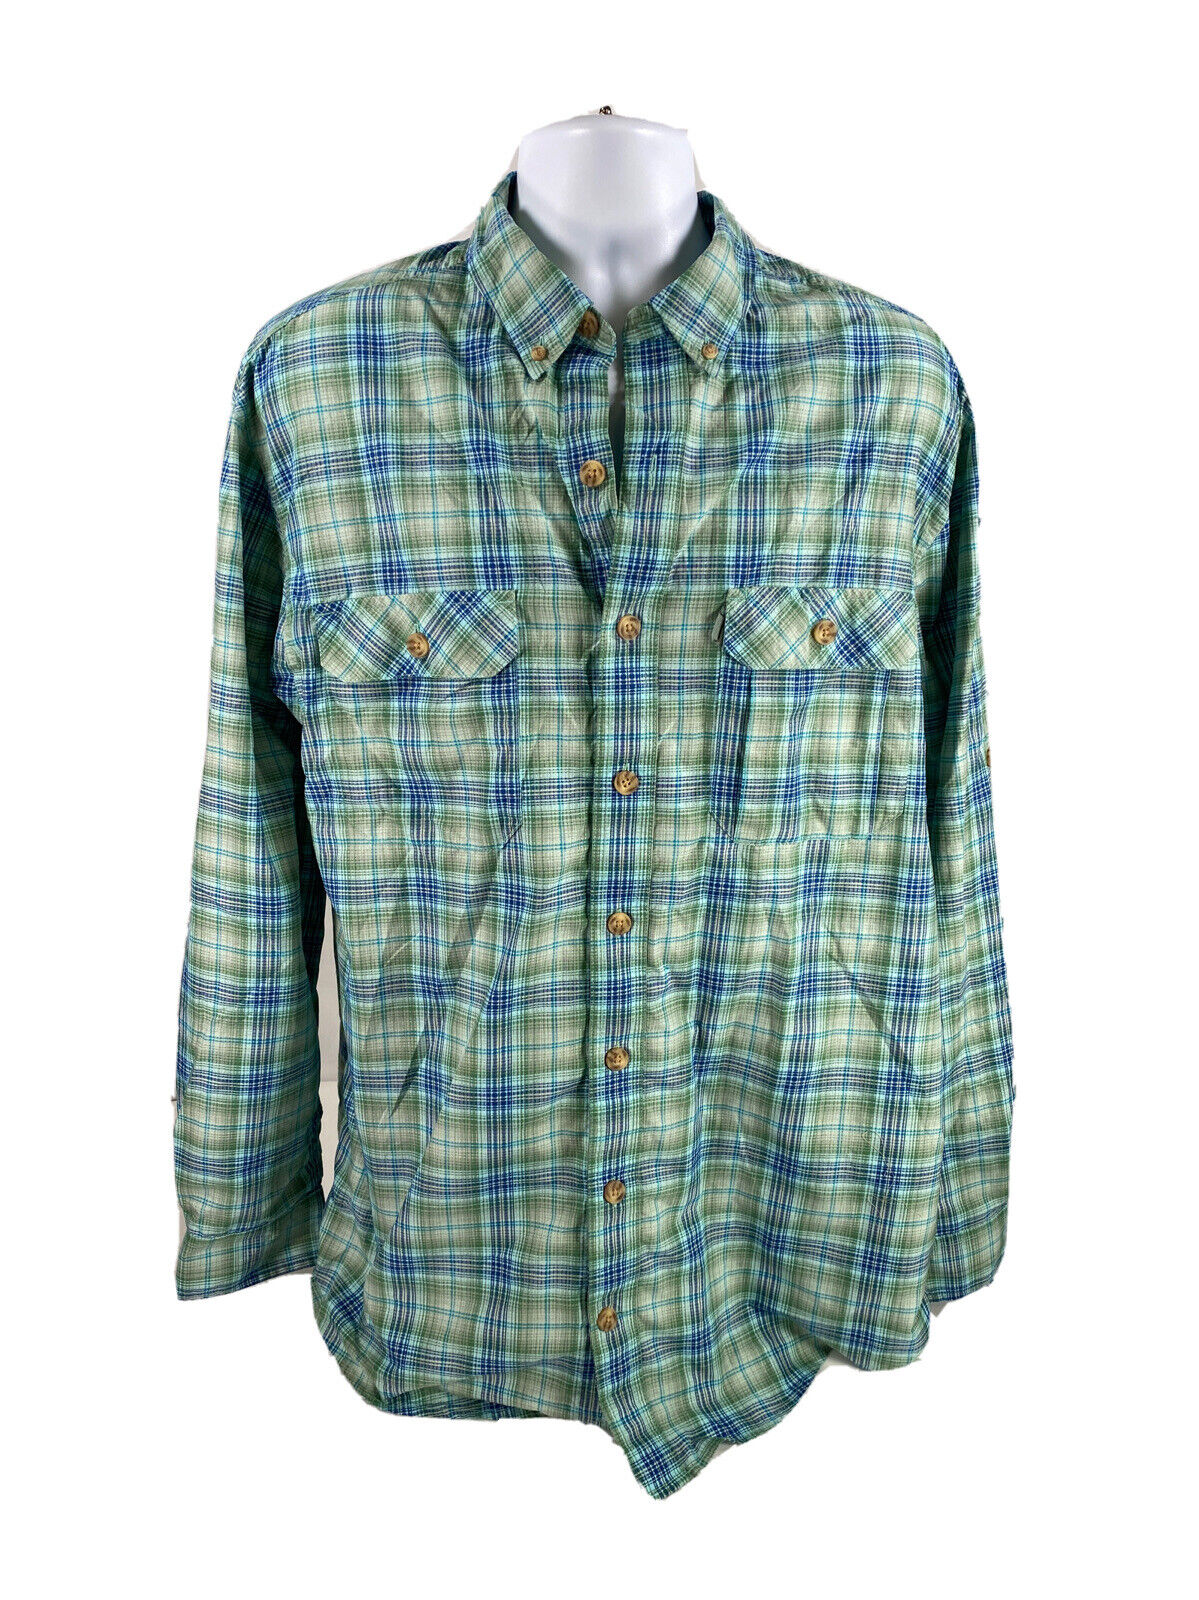 Duluth Trading Men's Green Plaid Standard Fit Button Up Shirt - L Tall